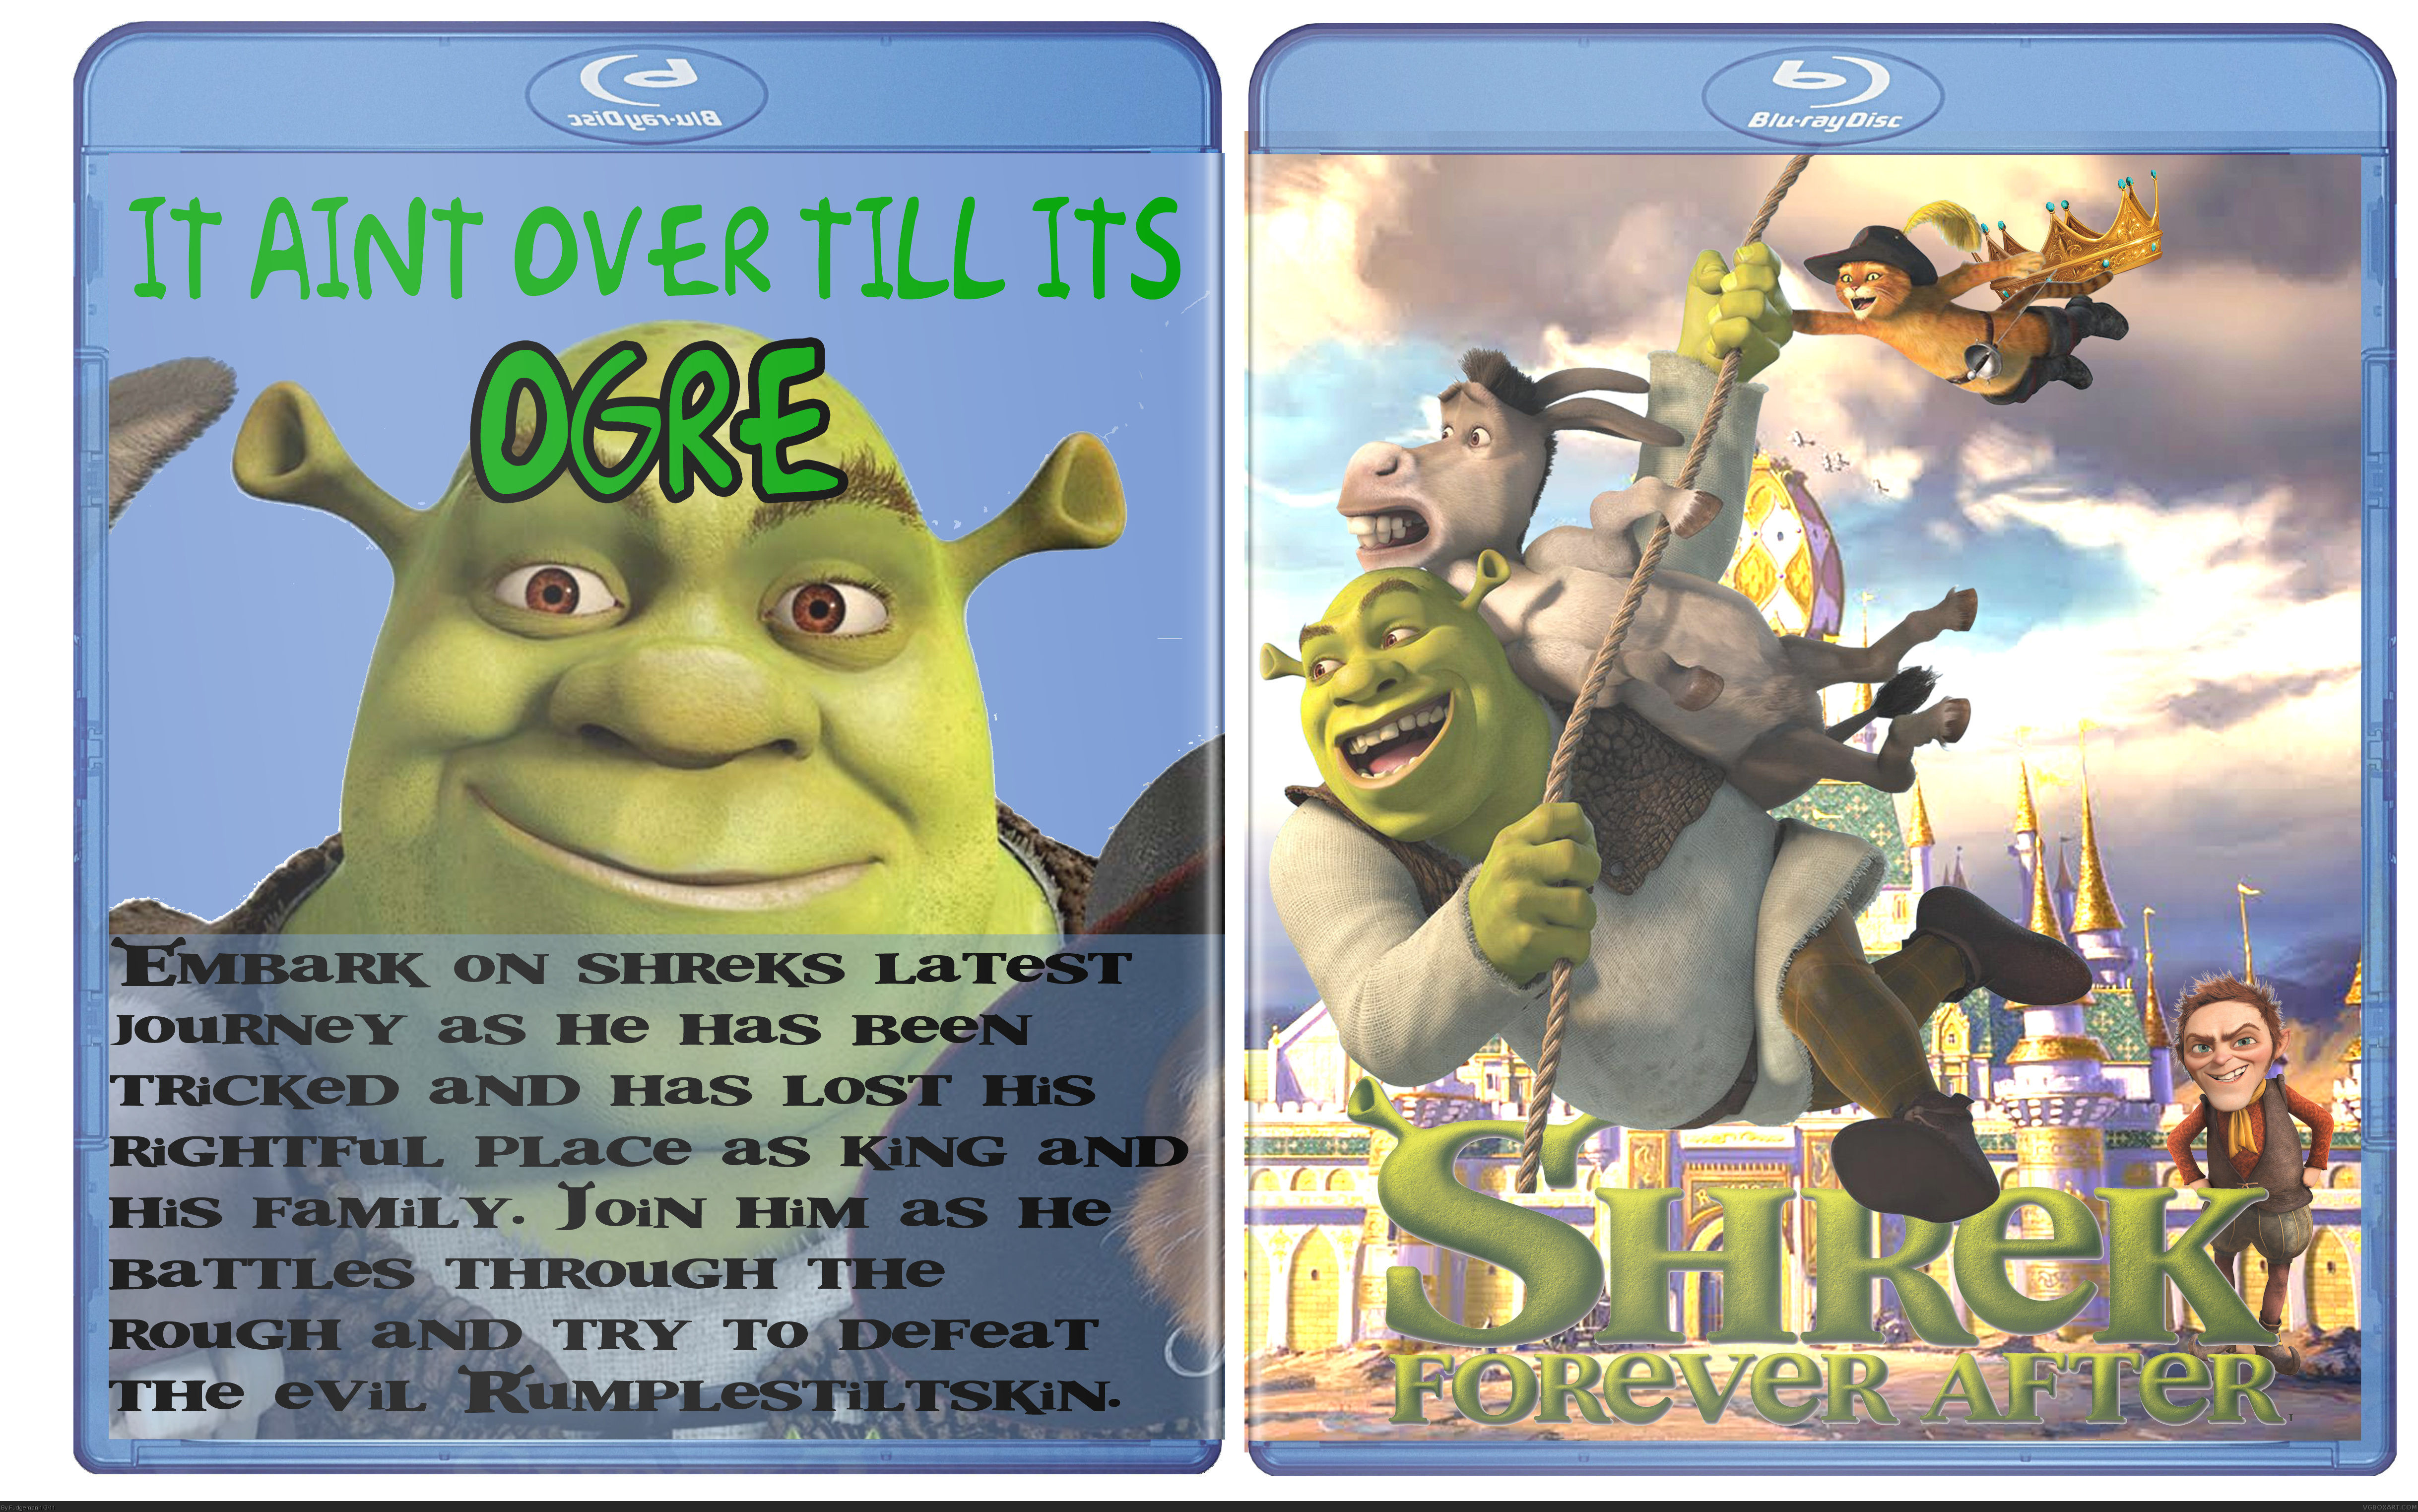 Shrek Forever After box cover